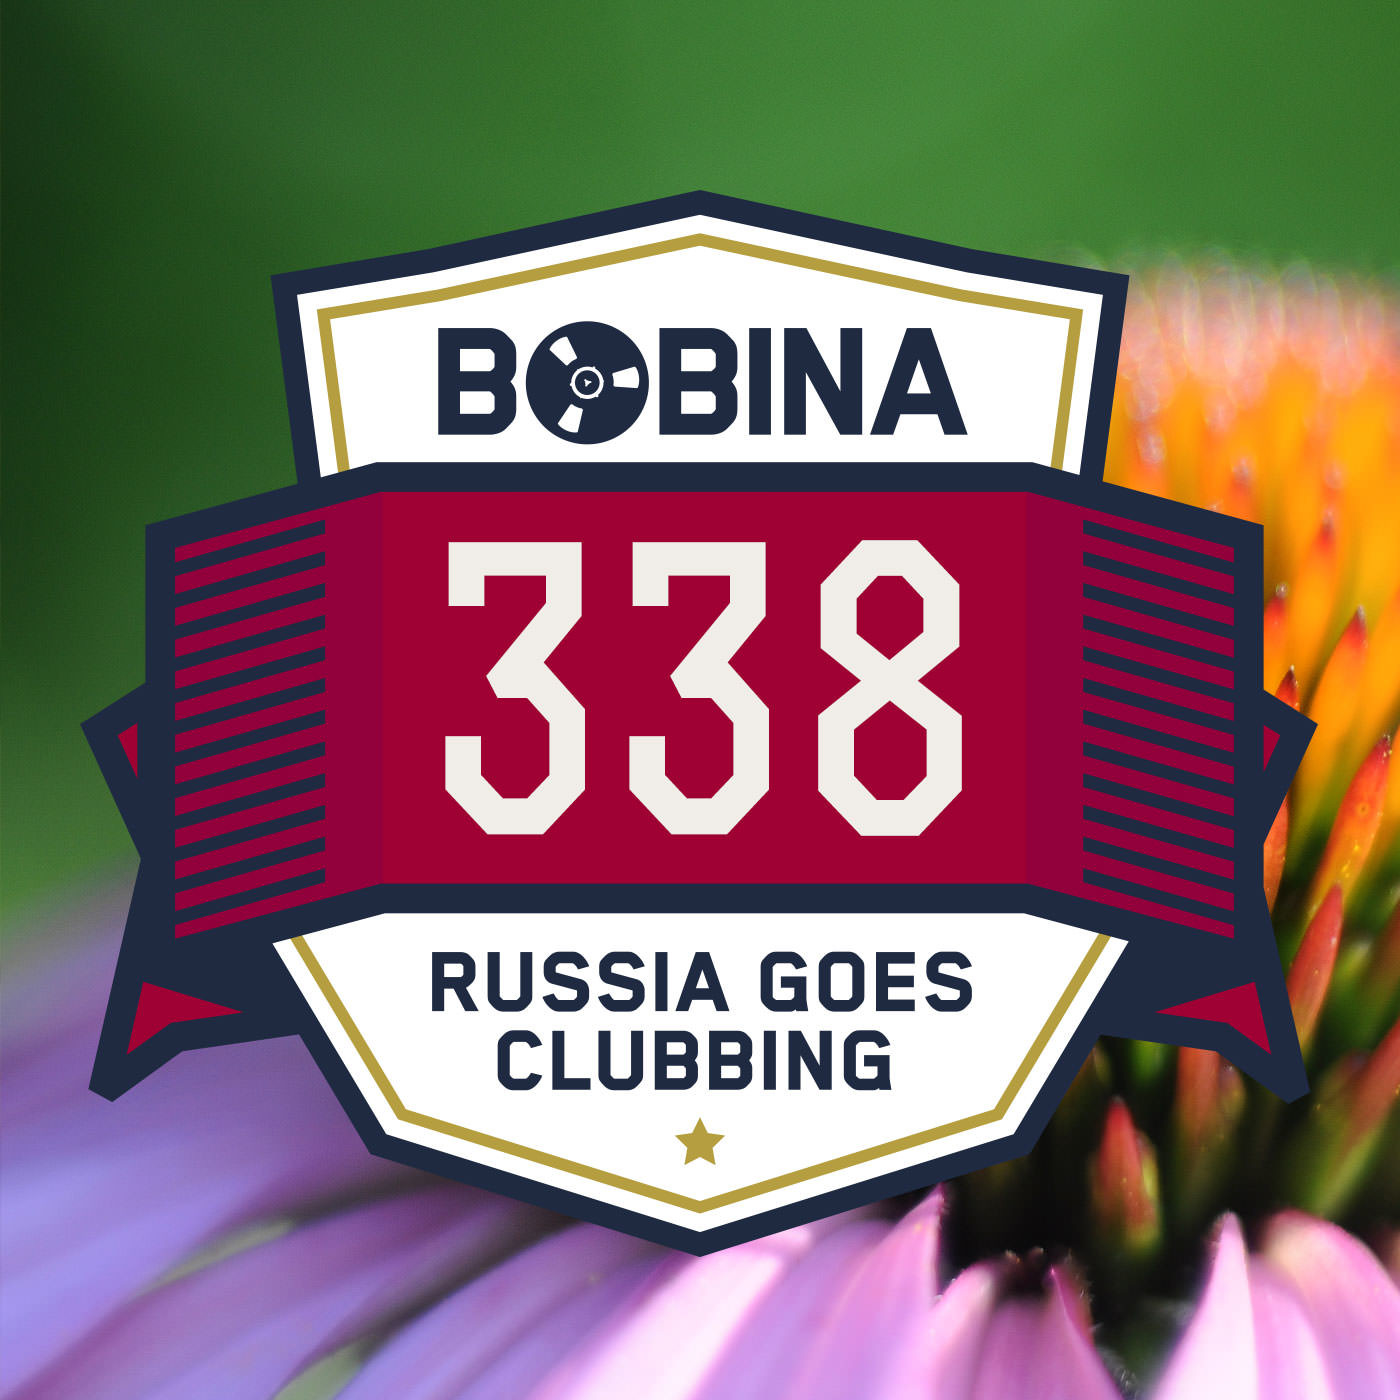 Nr. 338 Russia Goes Clubbing